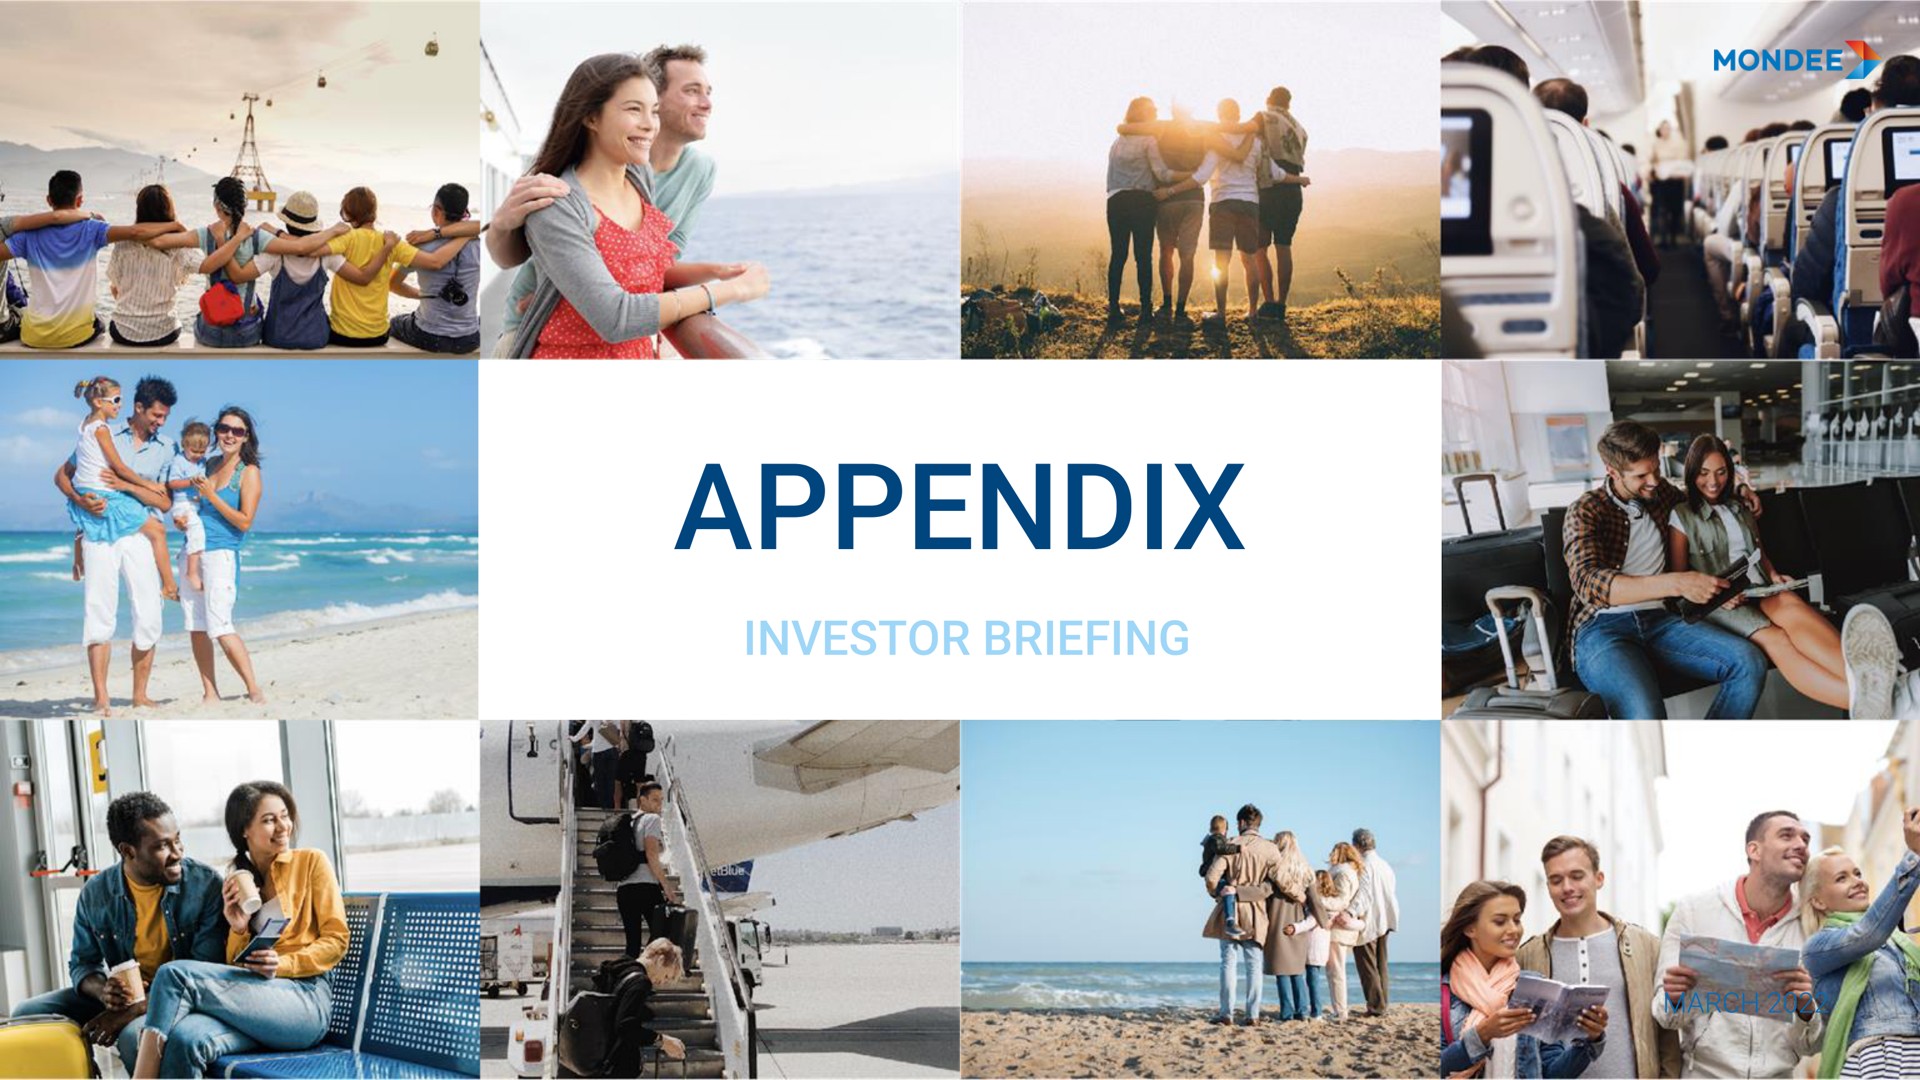 appendix investor briefing | Mondee